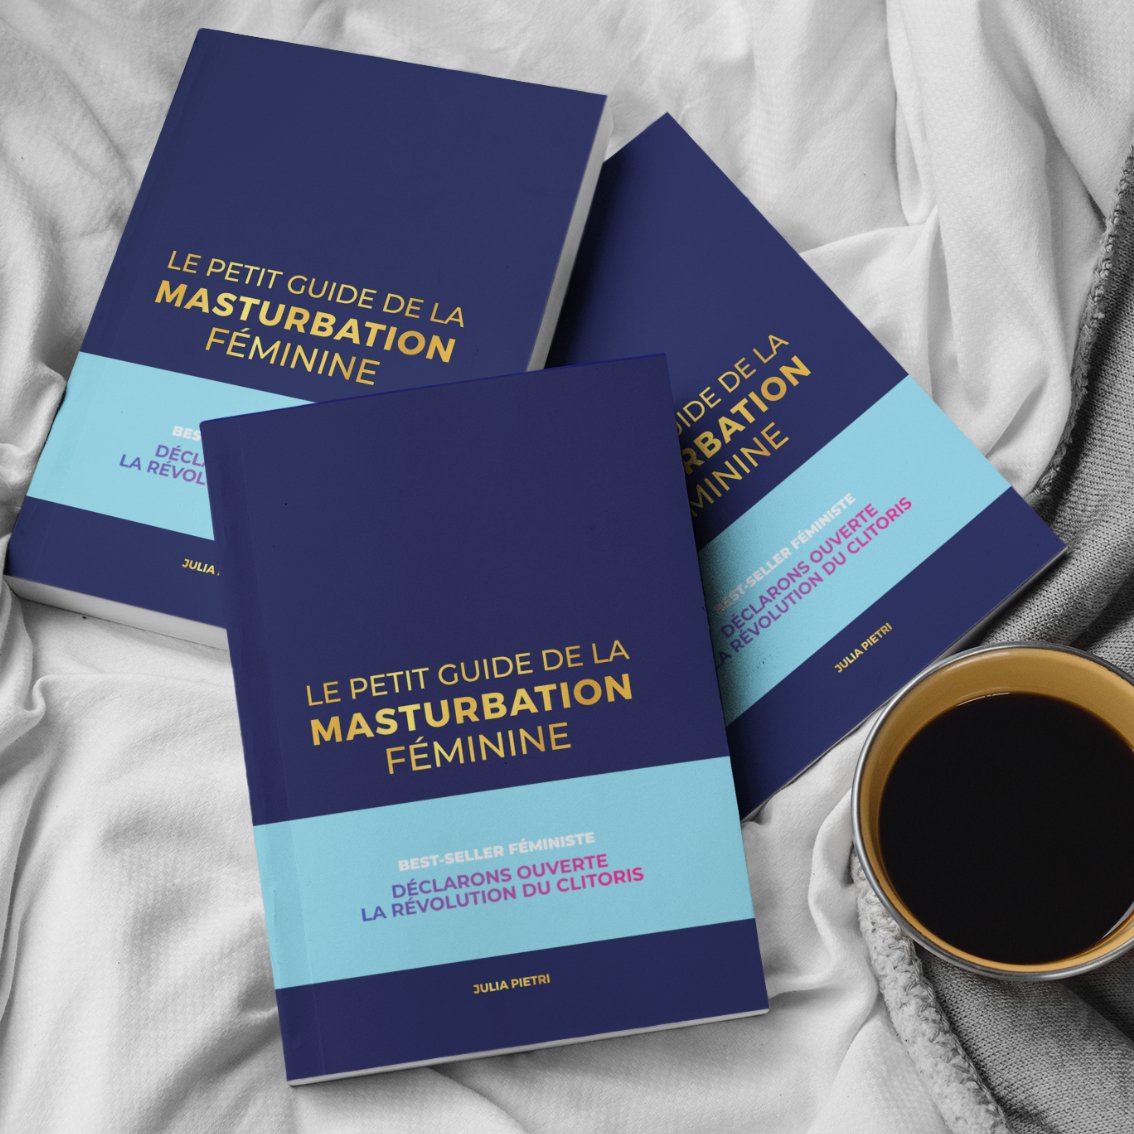 Le Petit Guide de la Masturbation Féminine de Julia Pietri - Gang du Clito